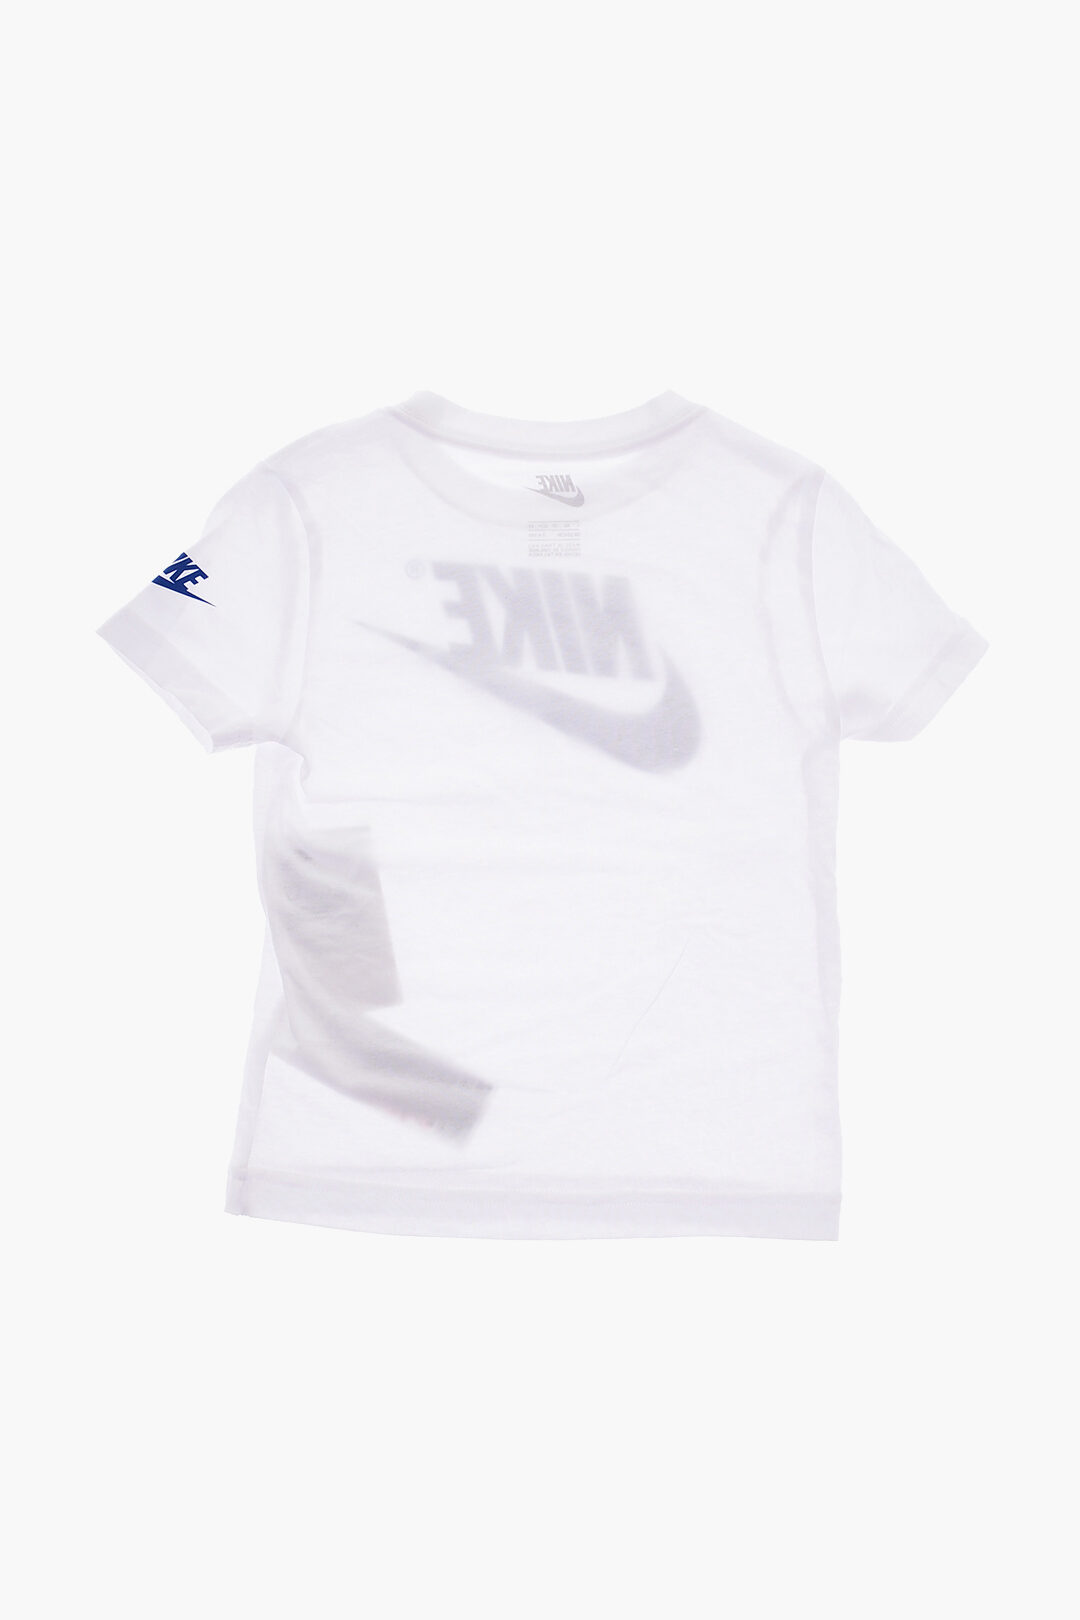 Nike KIDS Logo Printed T-Shirt and Shorts Set boys - Glamood Outlet